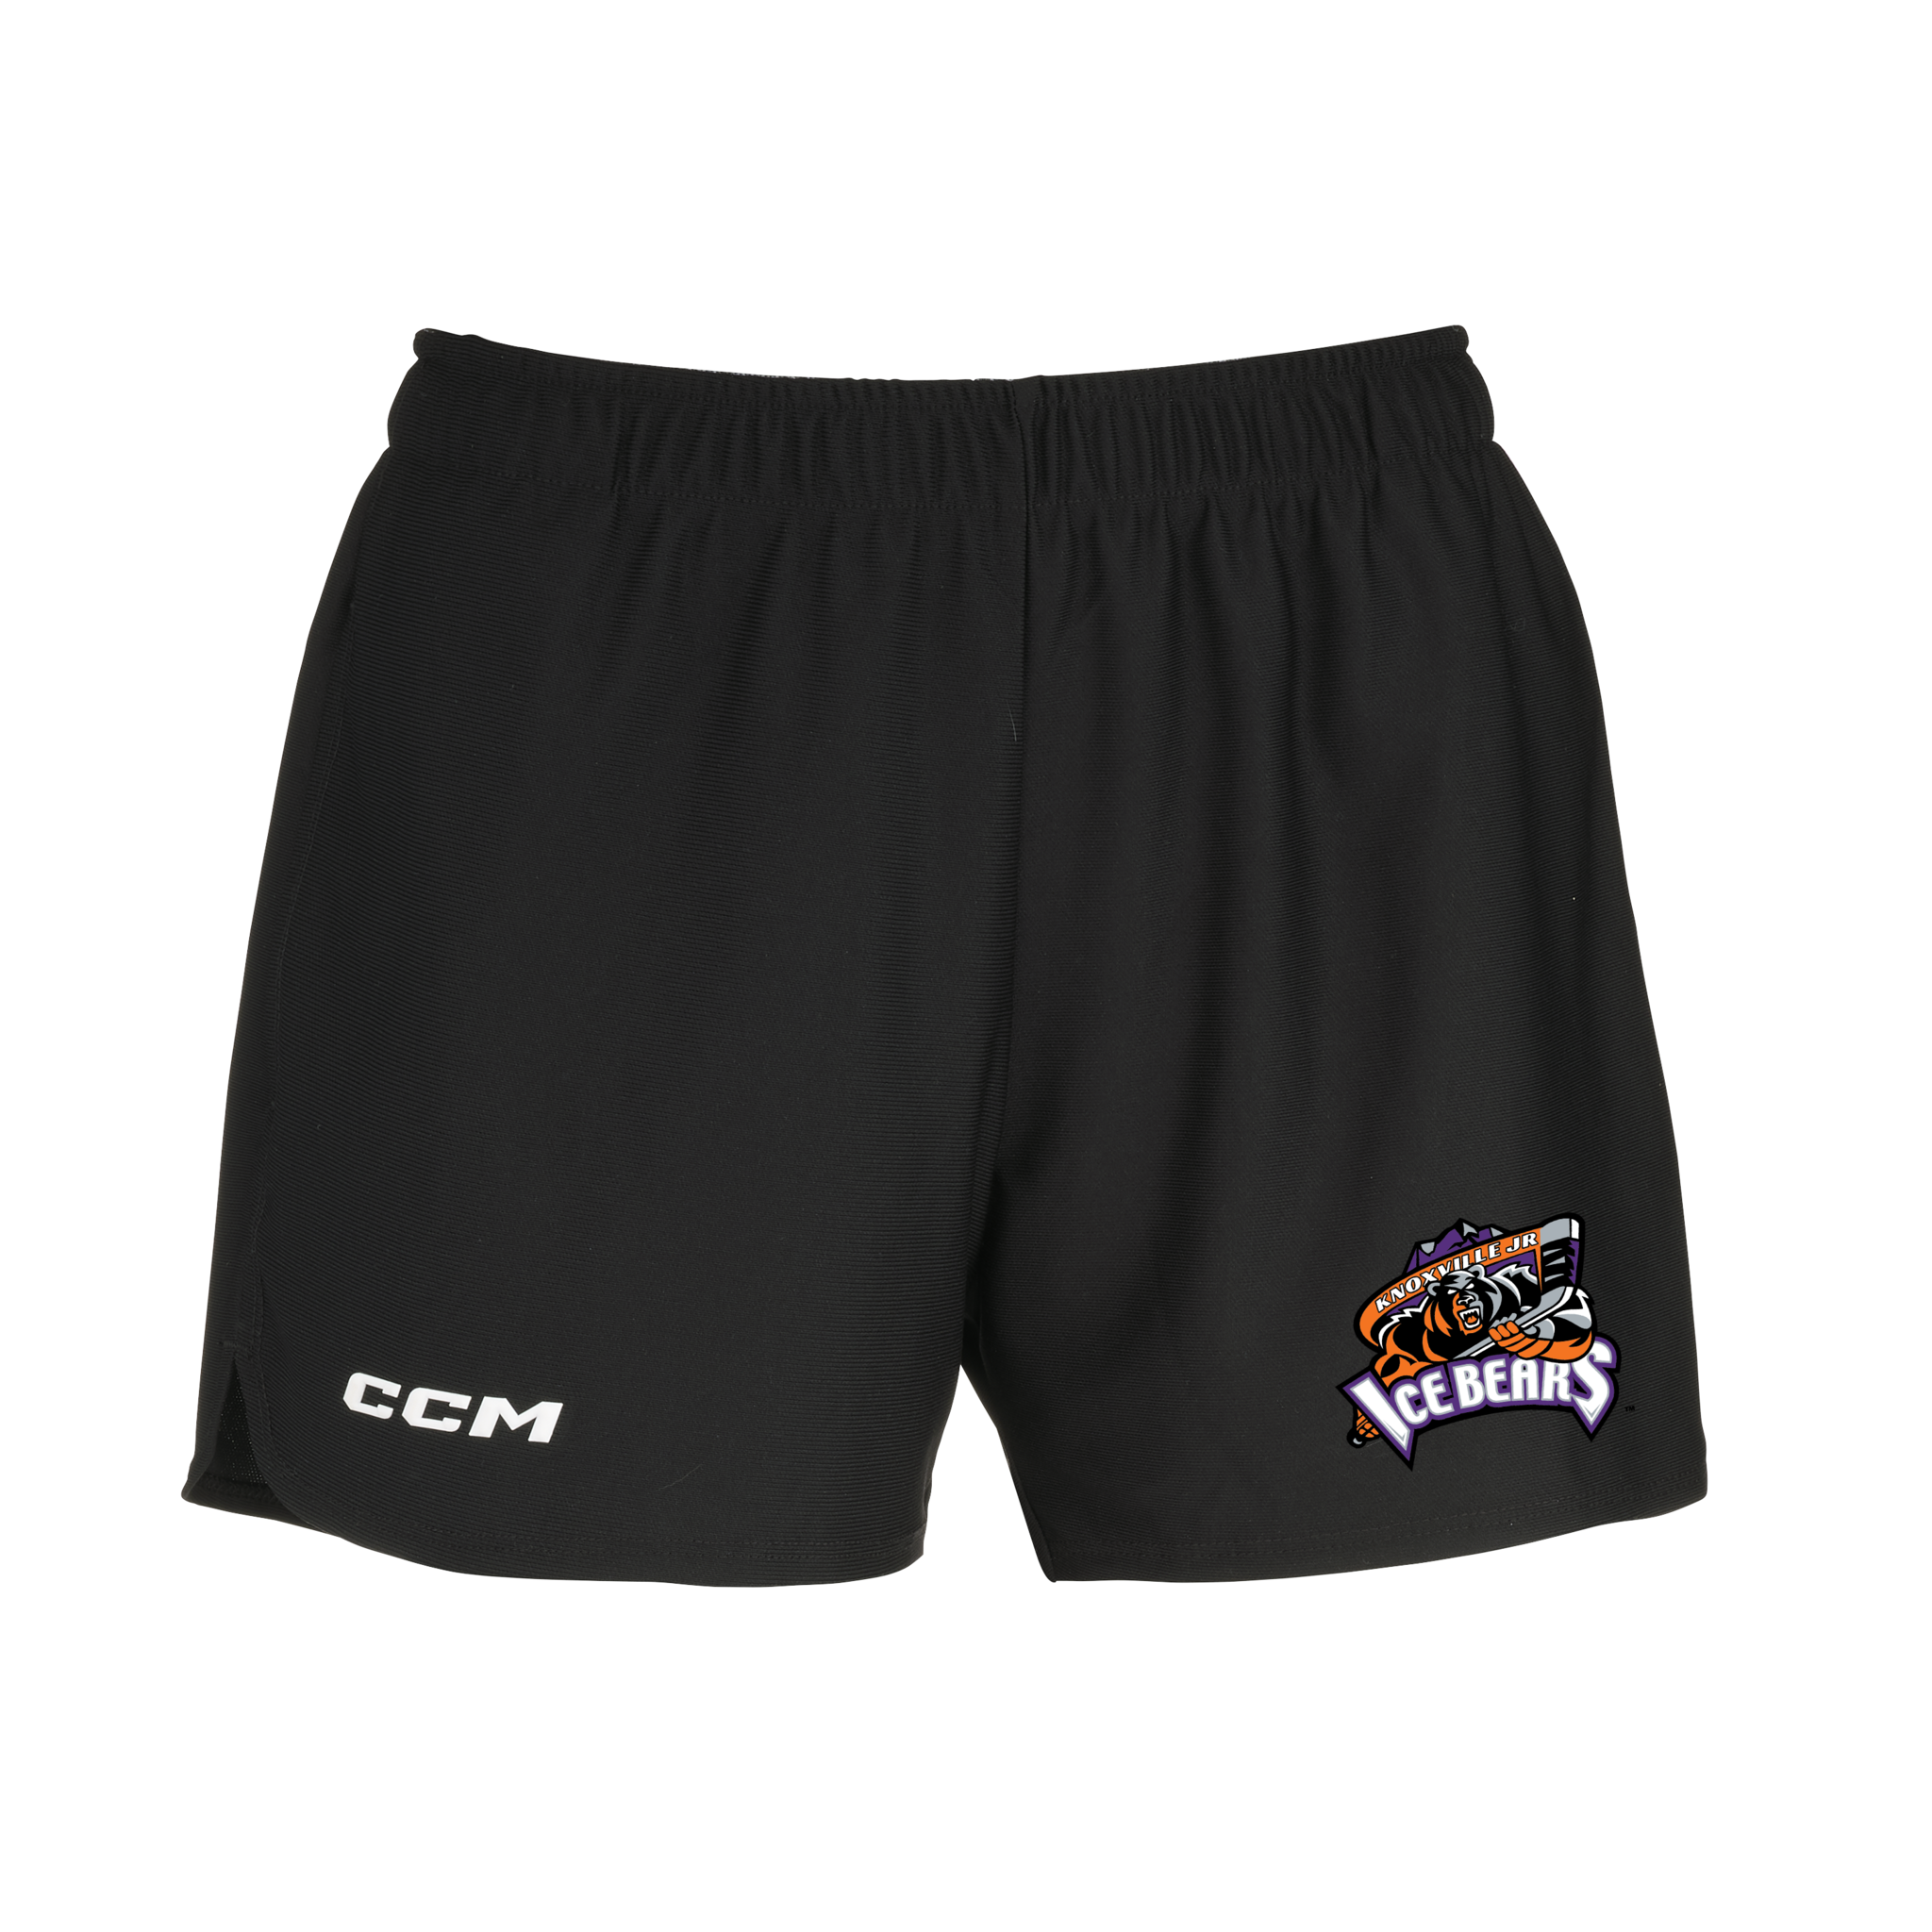 CCM CCM Women's Athletic Shorts - Jr Ice Bears